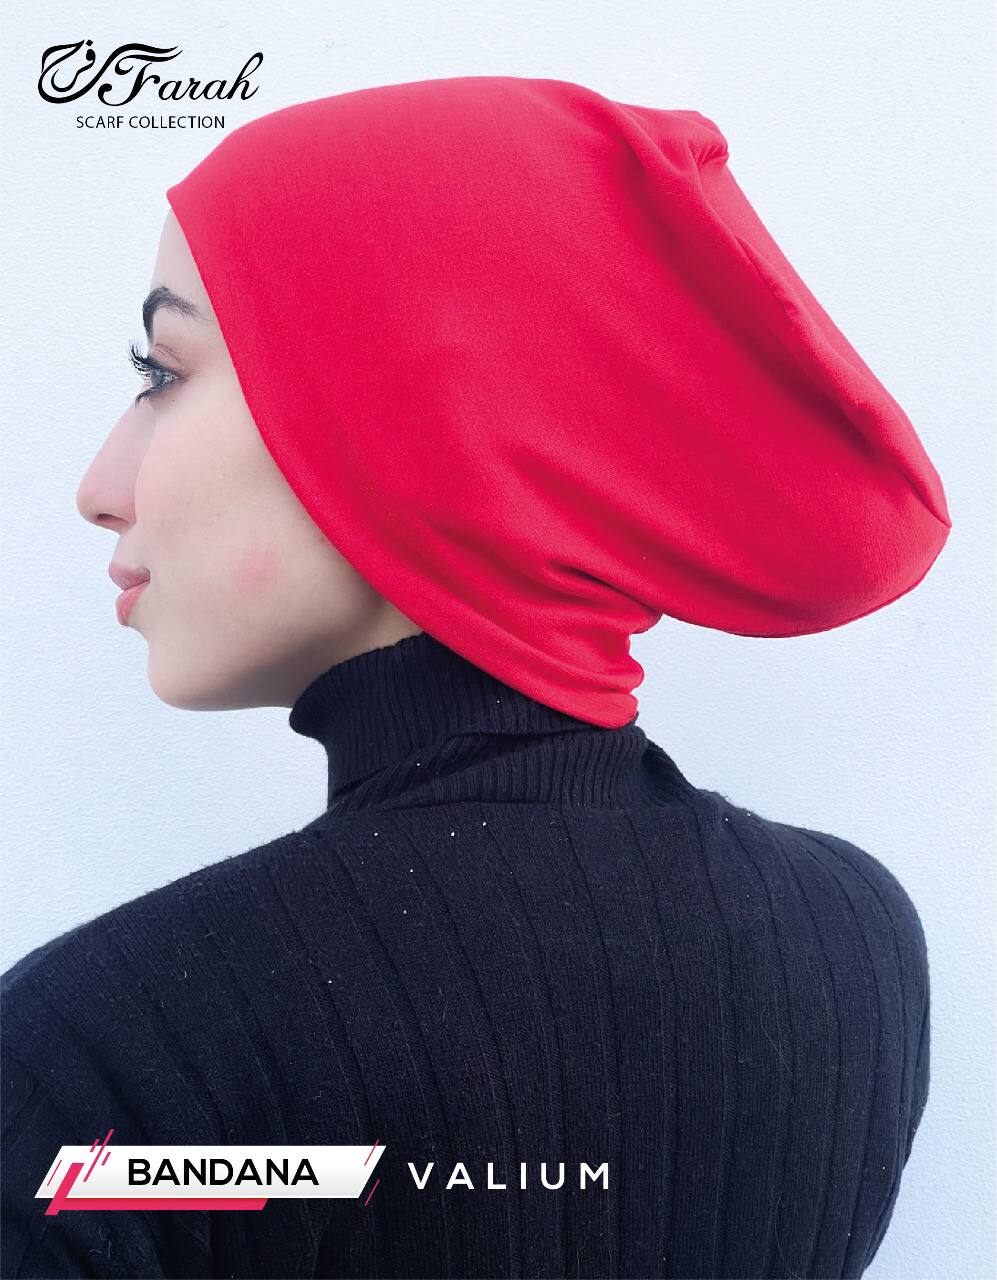 No-Thread Volume Close-End Underscarf Hijab Bandana - Cotton-Lycra Blend for Stylish Comfort - Fuchia